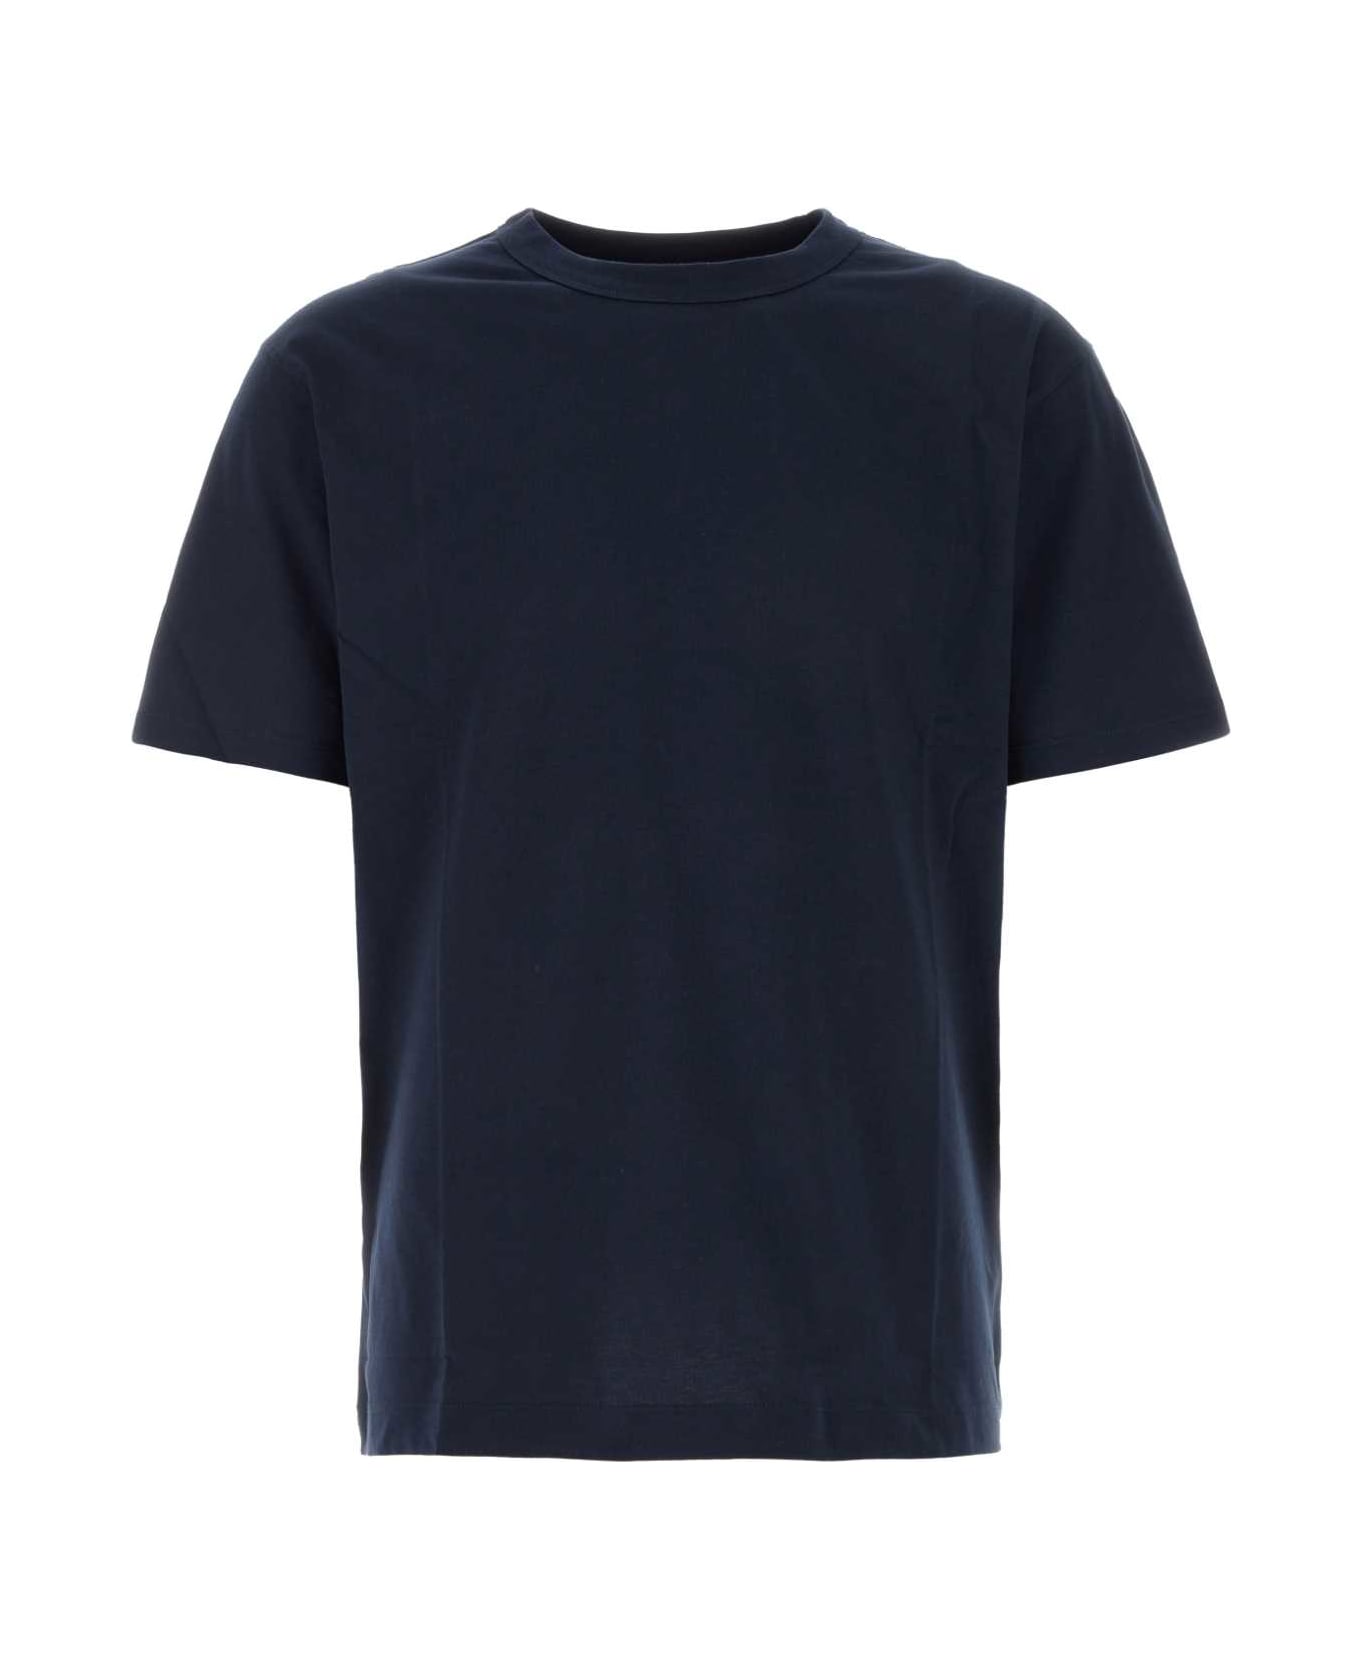 Dries Van Noten Midnight Blue Cotton Heer T-shirt - NAVY